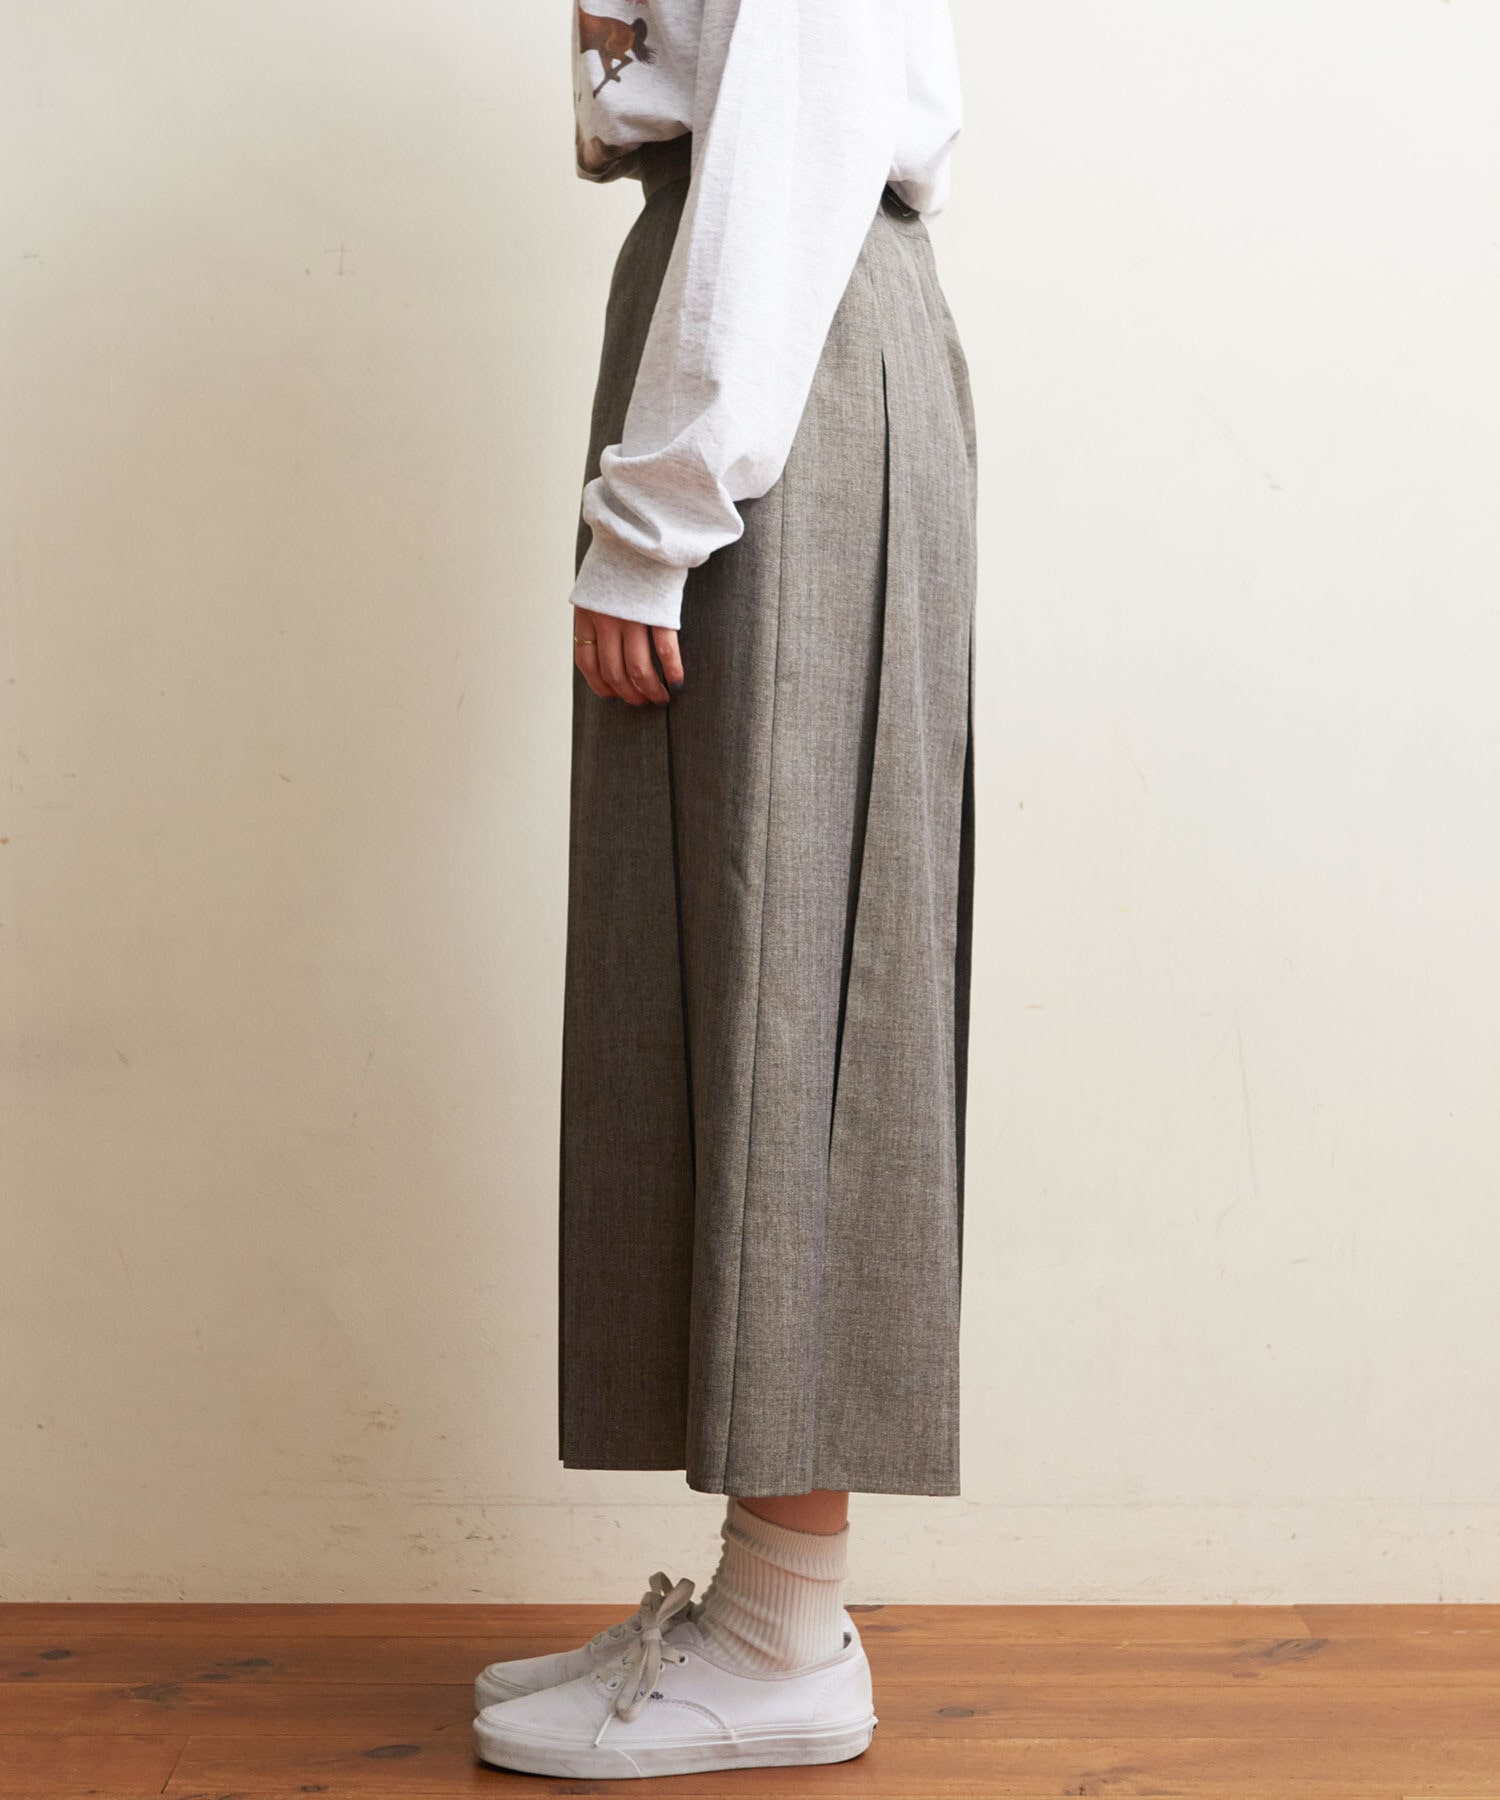 Fig London wool mood boxpleats スカート 公式 7200円 sandorobotics.com